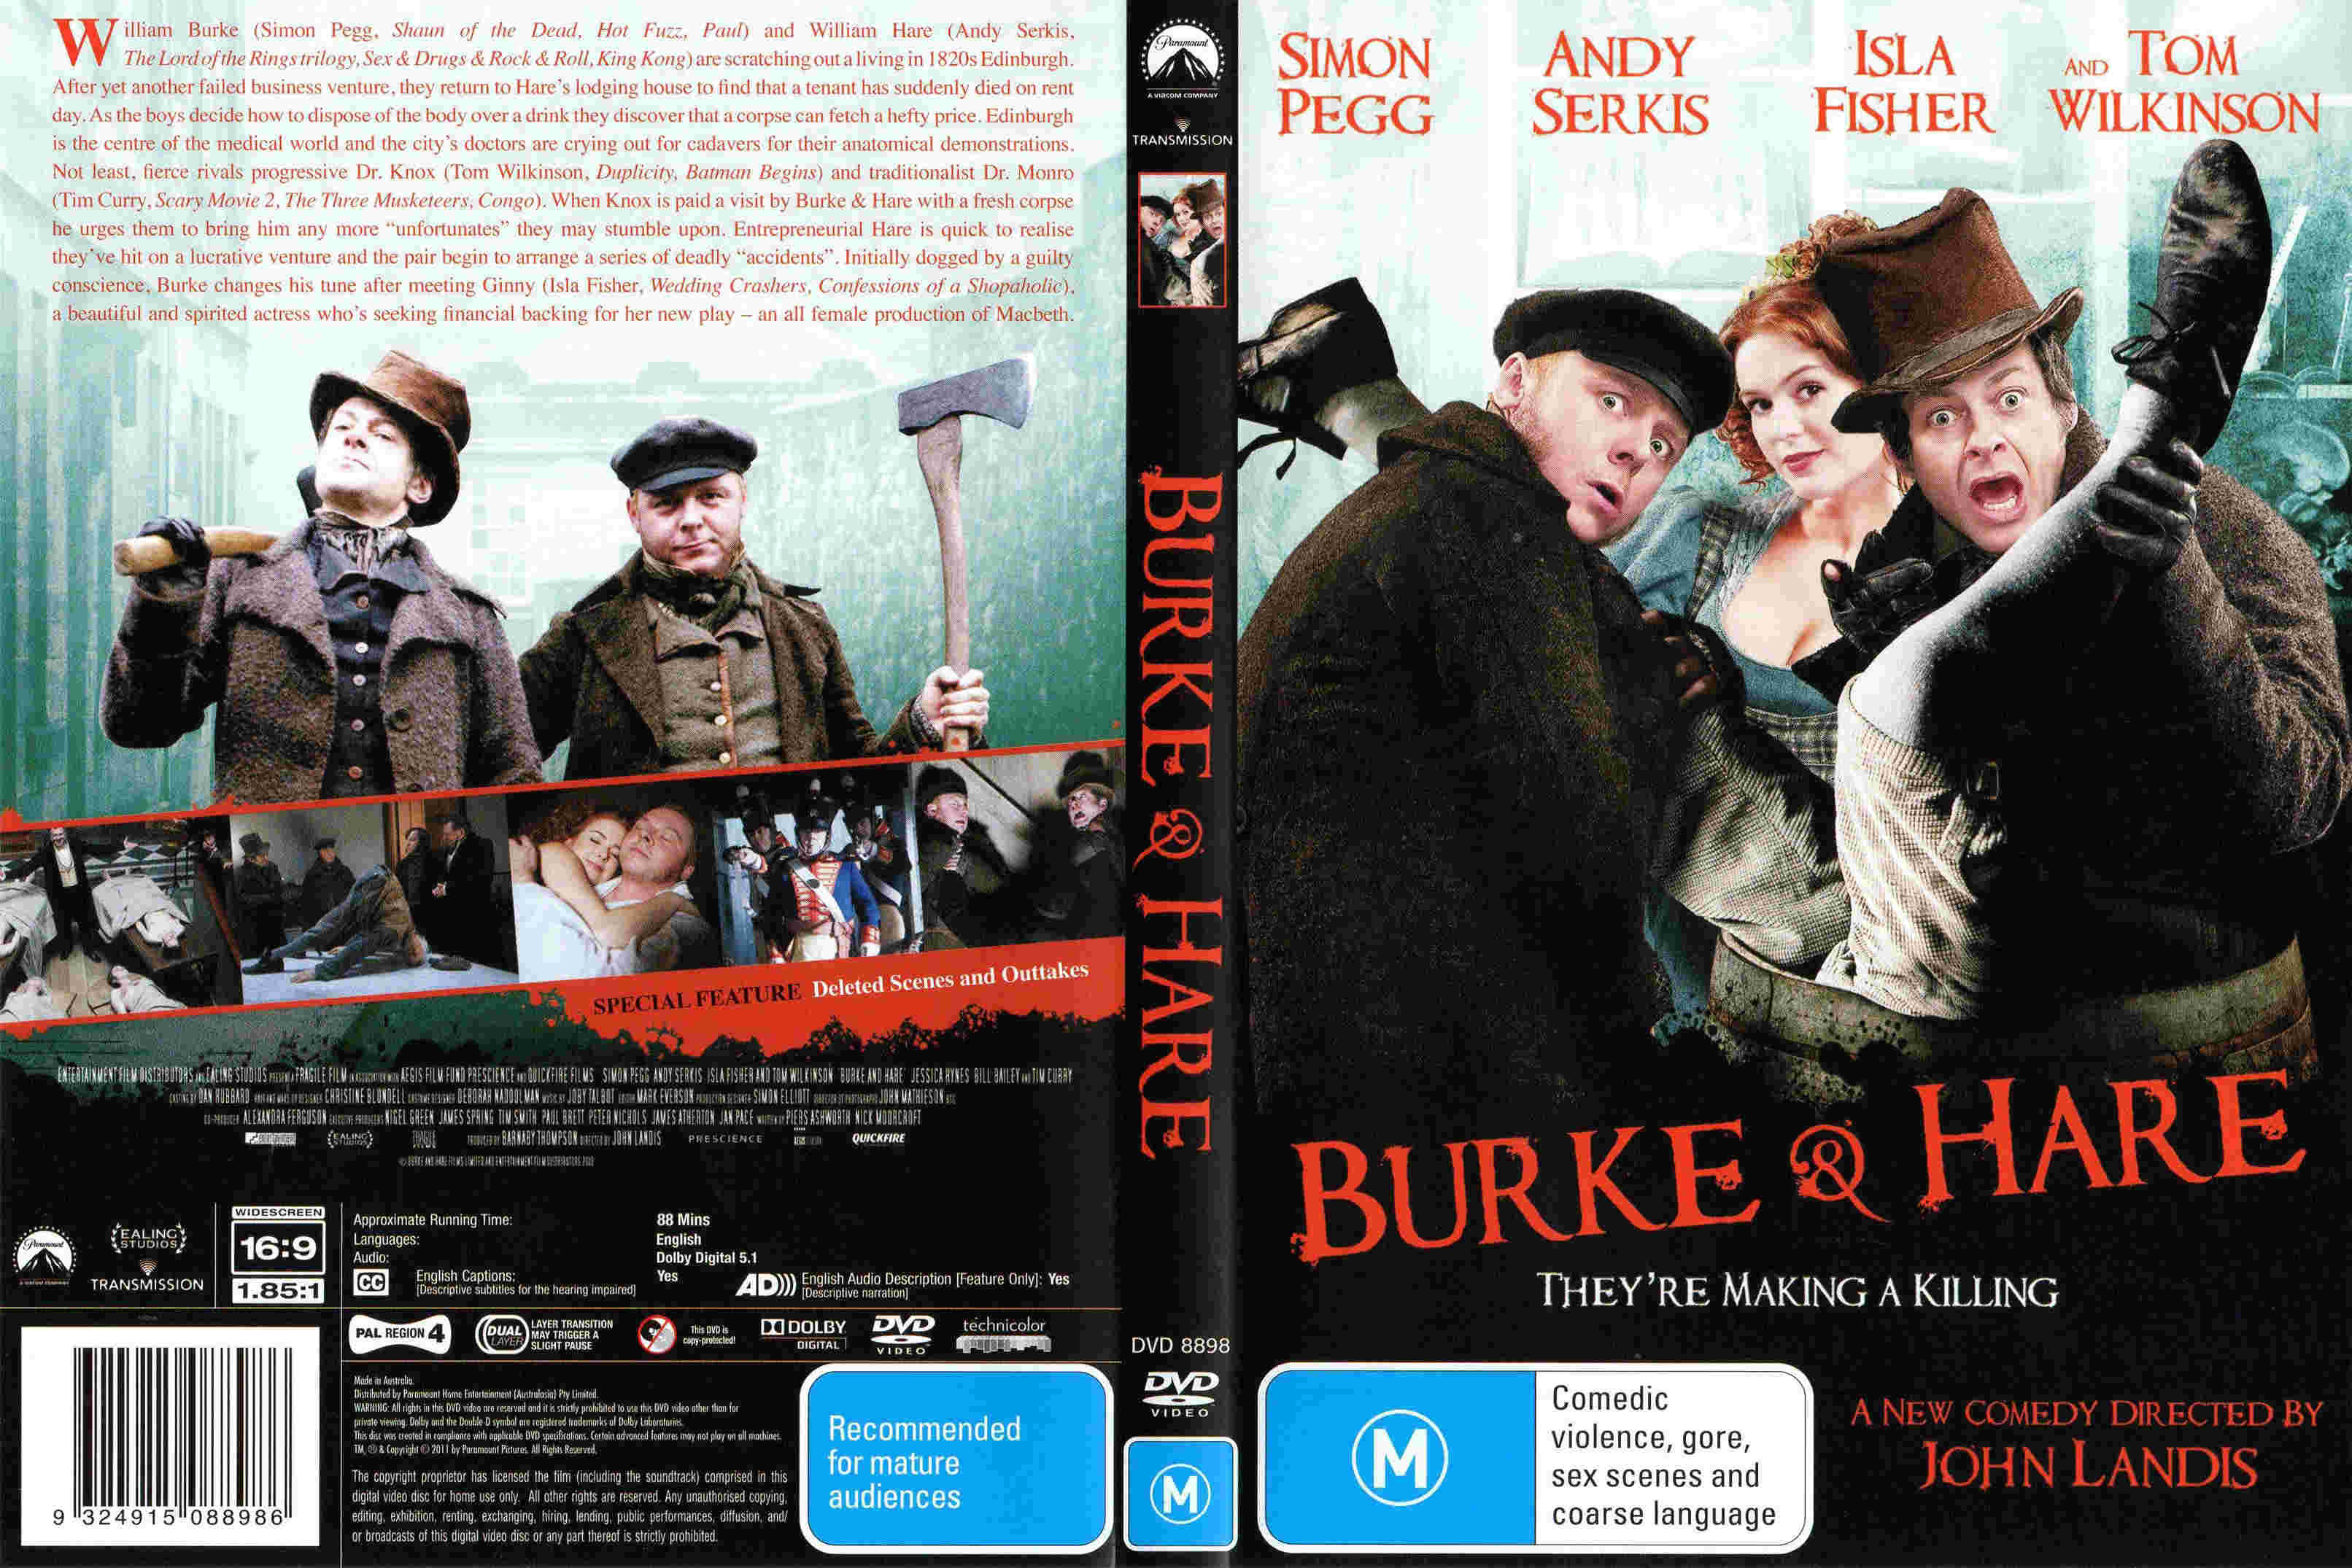 Burke & Hare HD wallpapers, Desktop wallpaper - most viewed